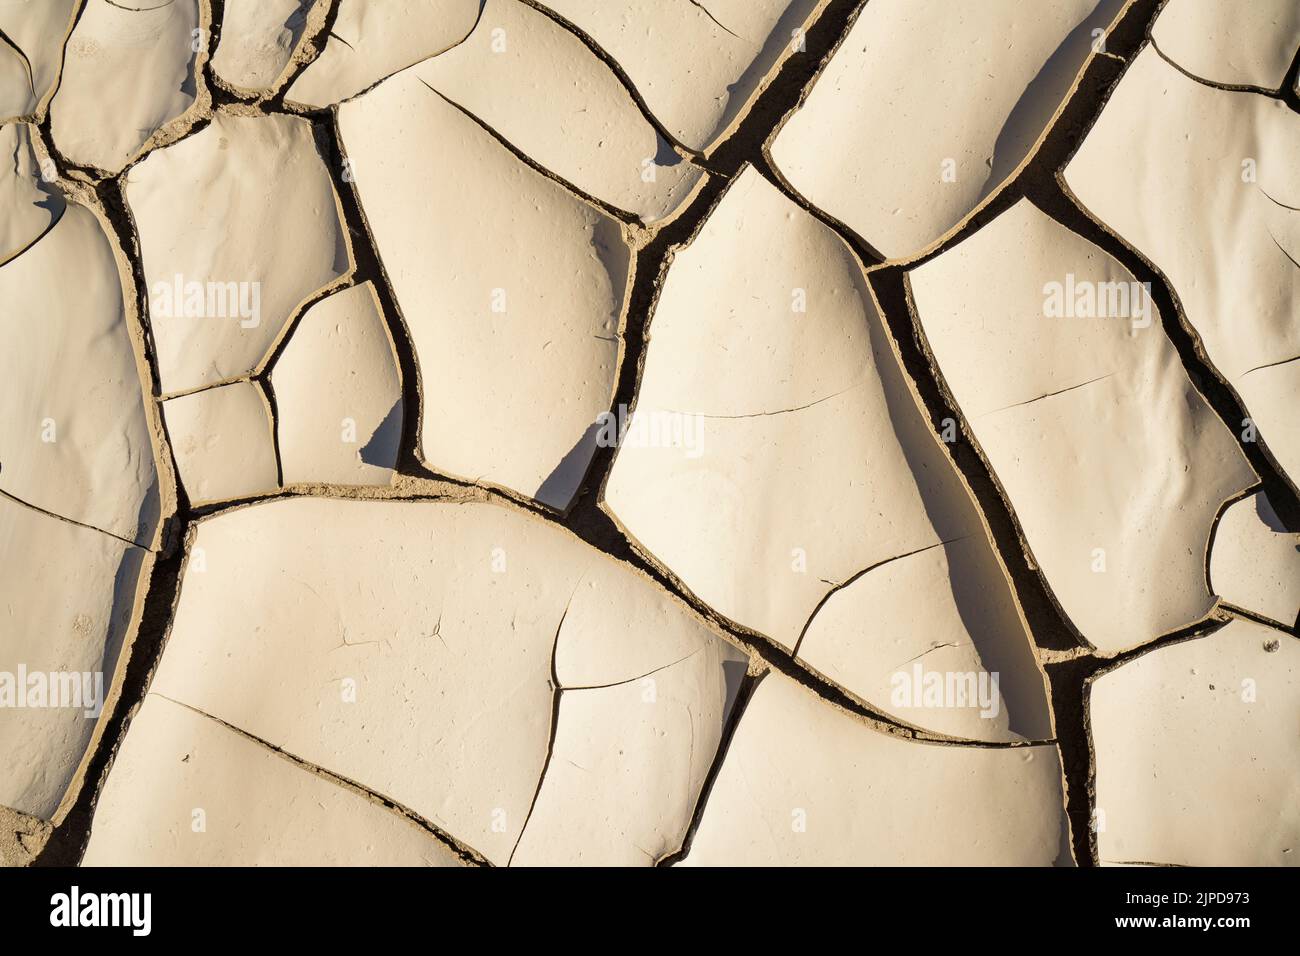 Tonmuster in einem trockenen Flussbett, Klimawandel symbolisch. Swakop River, Namibia, Afrika Stockfoto